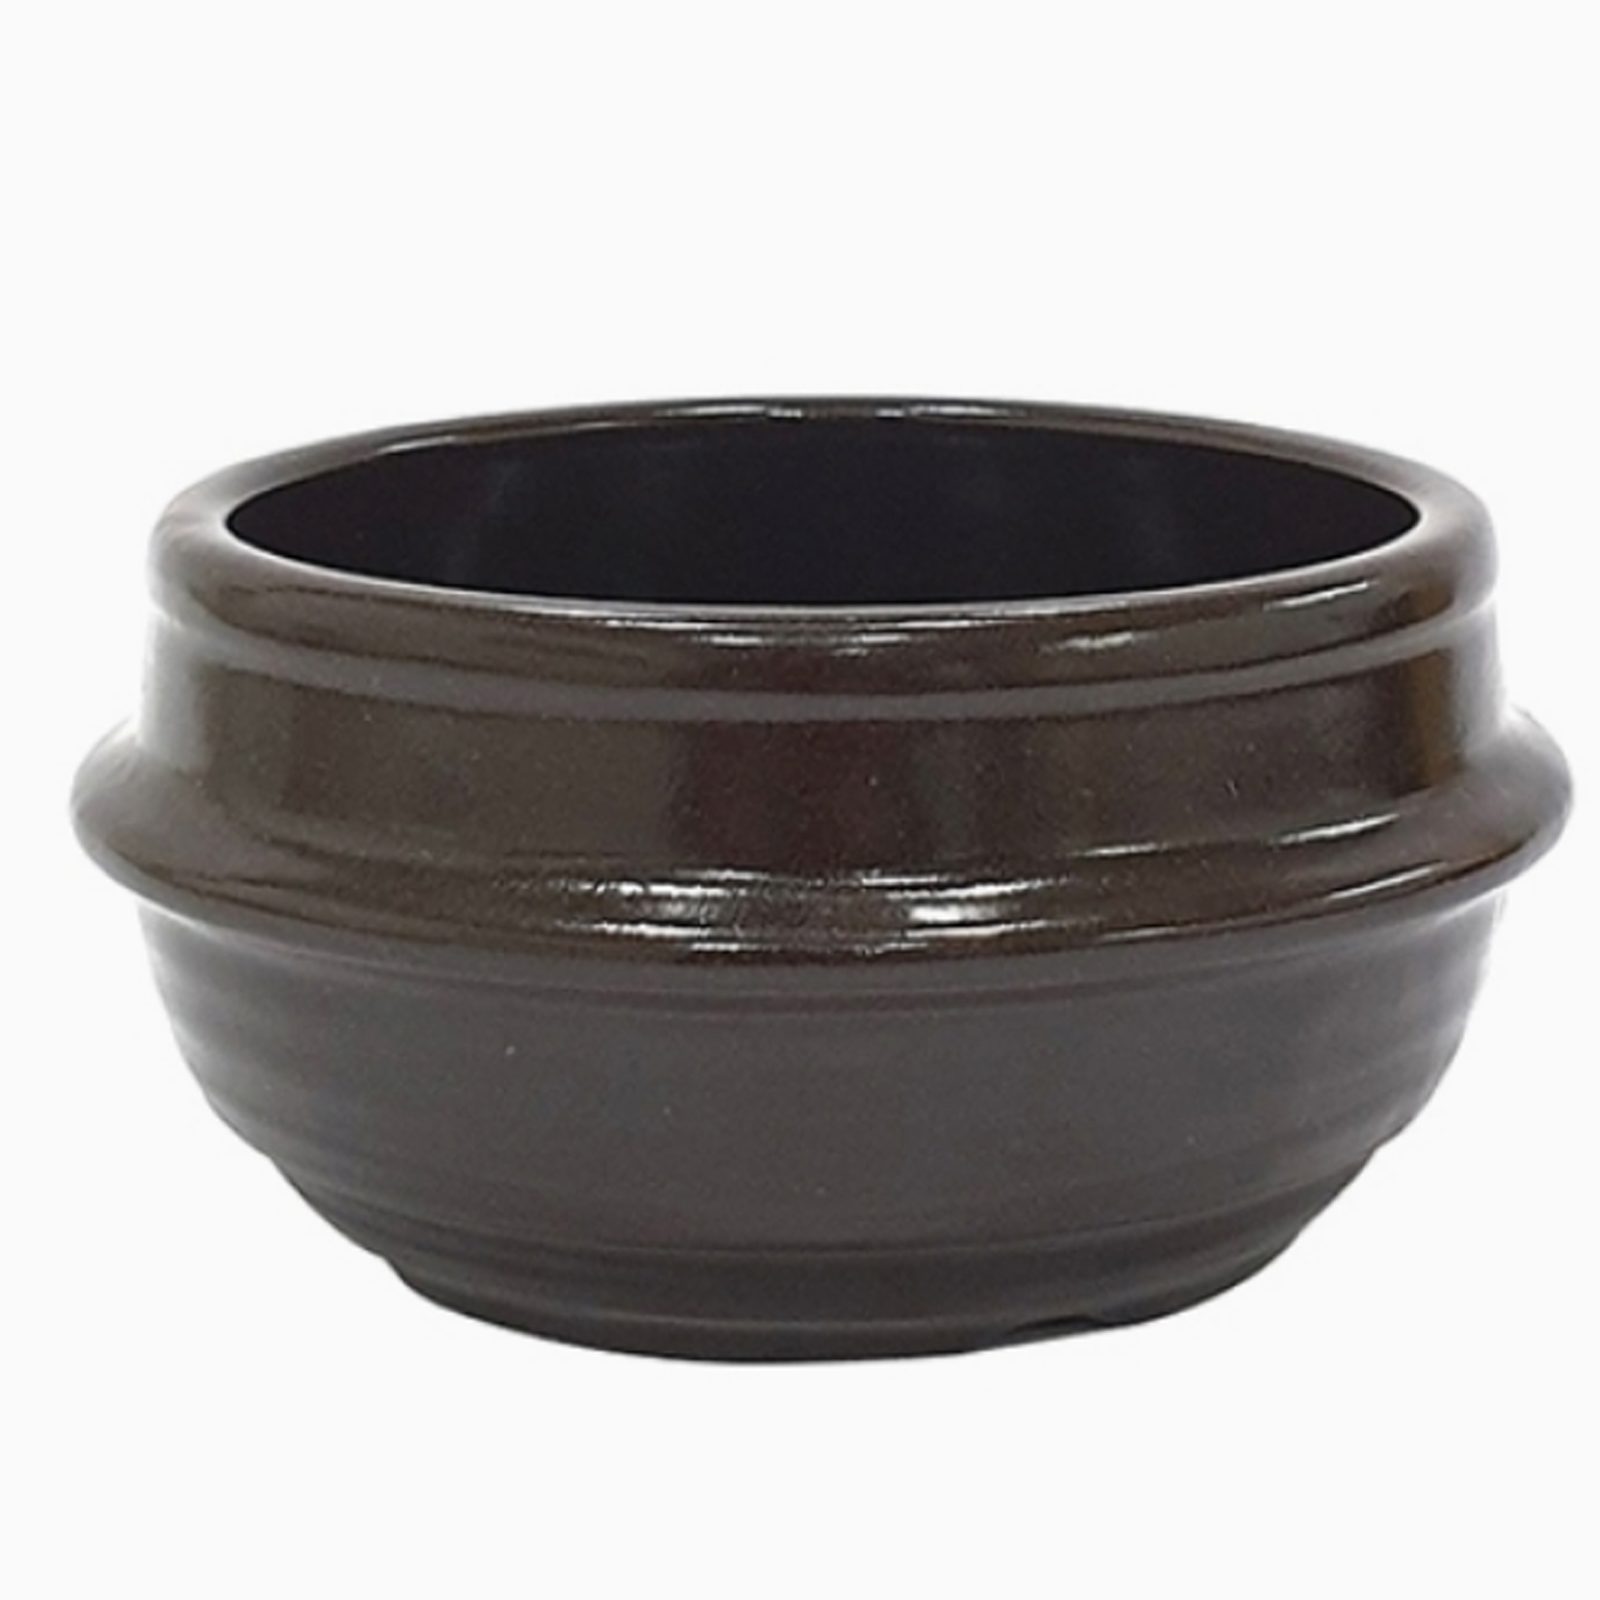 https://nowinseoul.com/wp-content/uploads/2020/09/Dolsot-Korean-cooking-stone-bowl_01.jpg